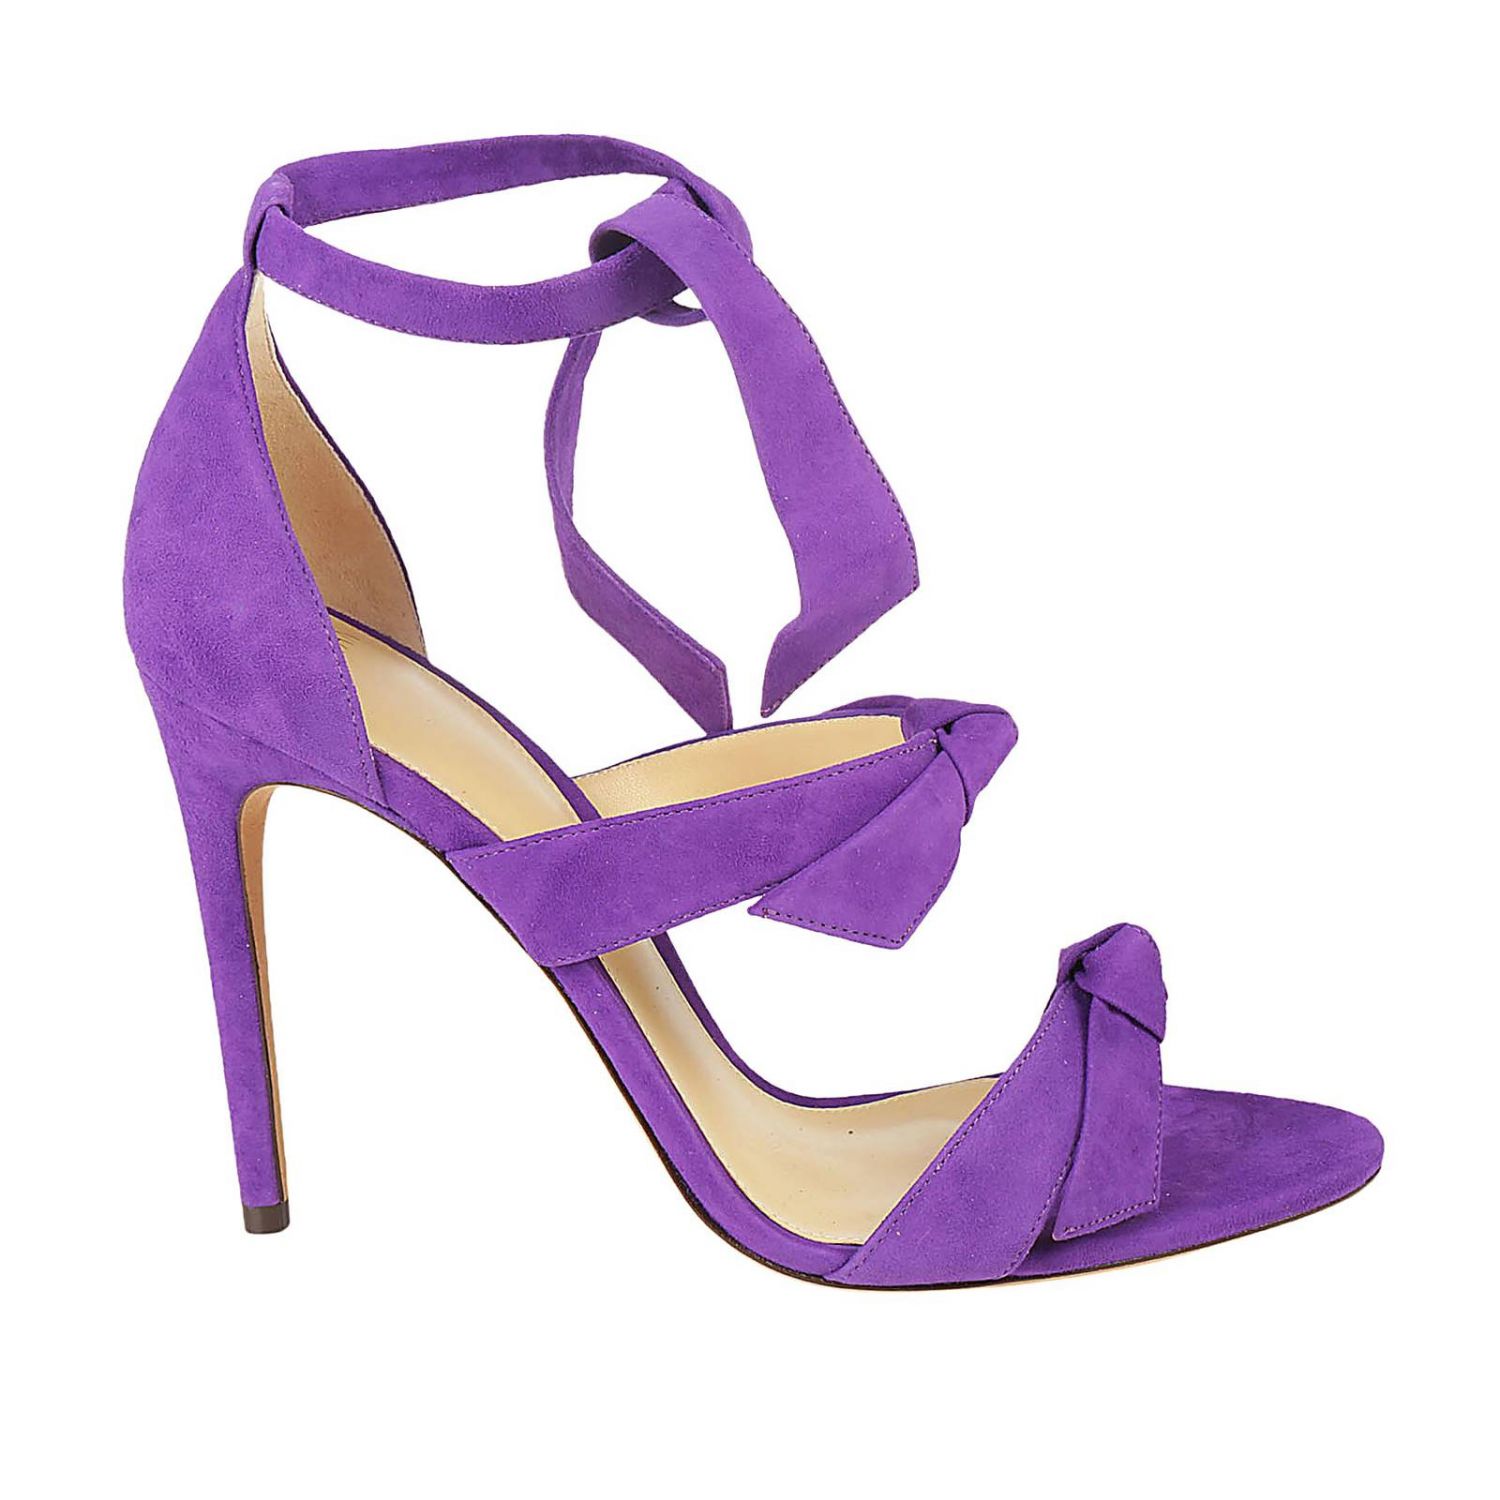 Shoes women Alexandre Birman | Heeled Sandals Alexandre Birman Women ...